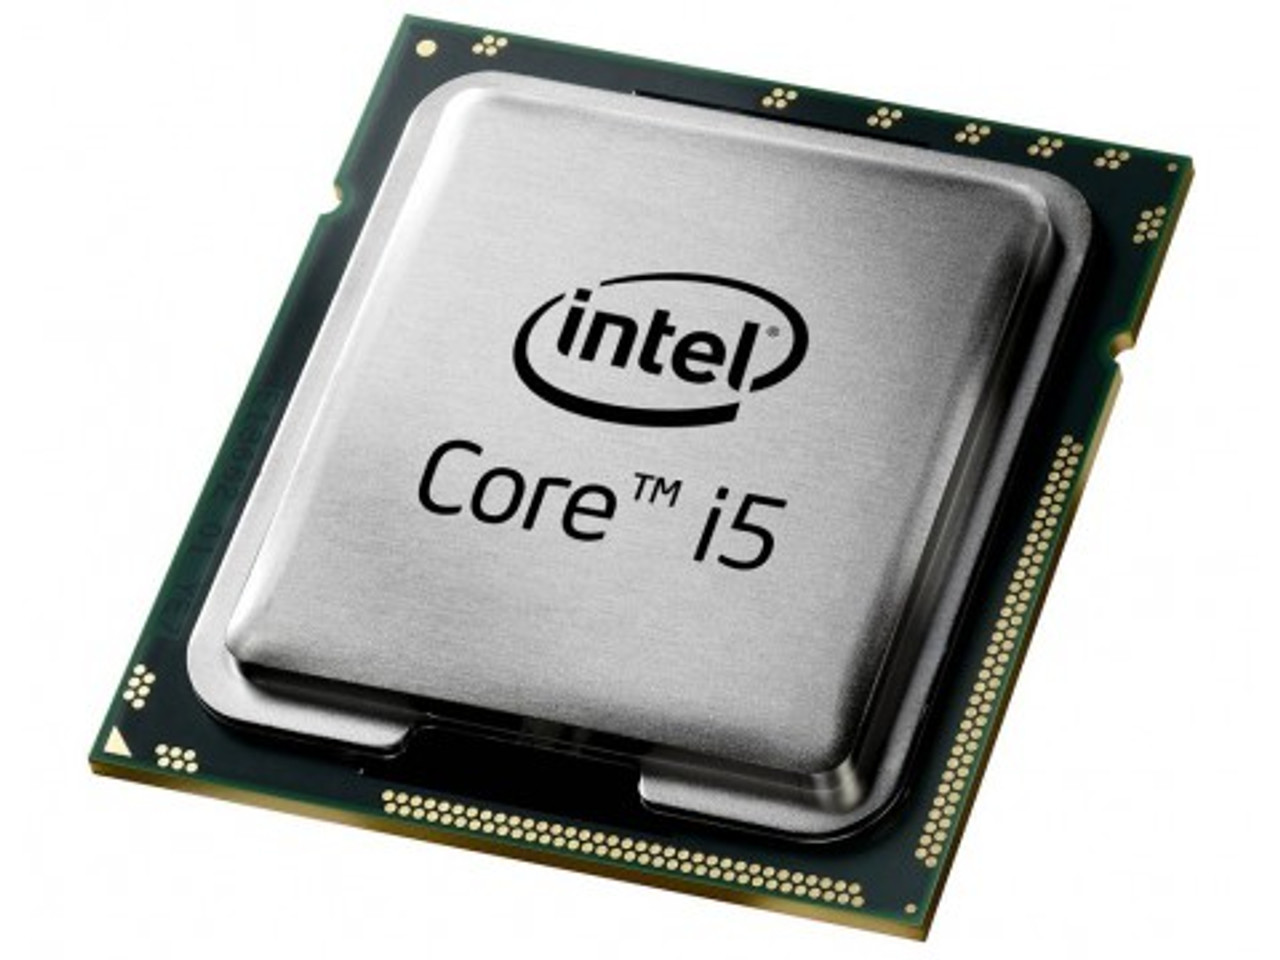 i5-2500T Intel Core i5 Quad-Core 2.30GHz 5.00GT/s DMI 6MB L3 Cache Processor